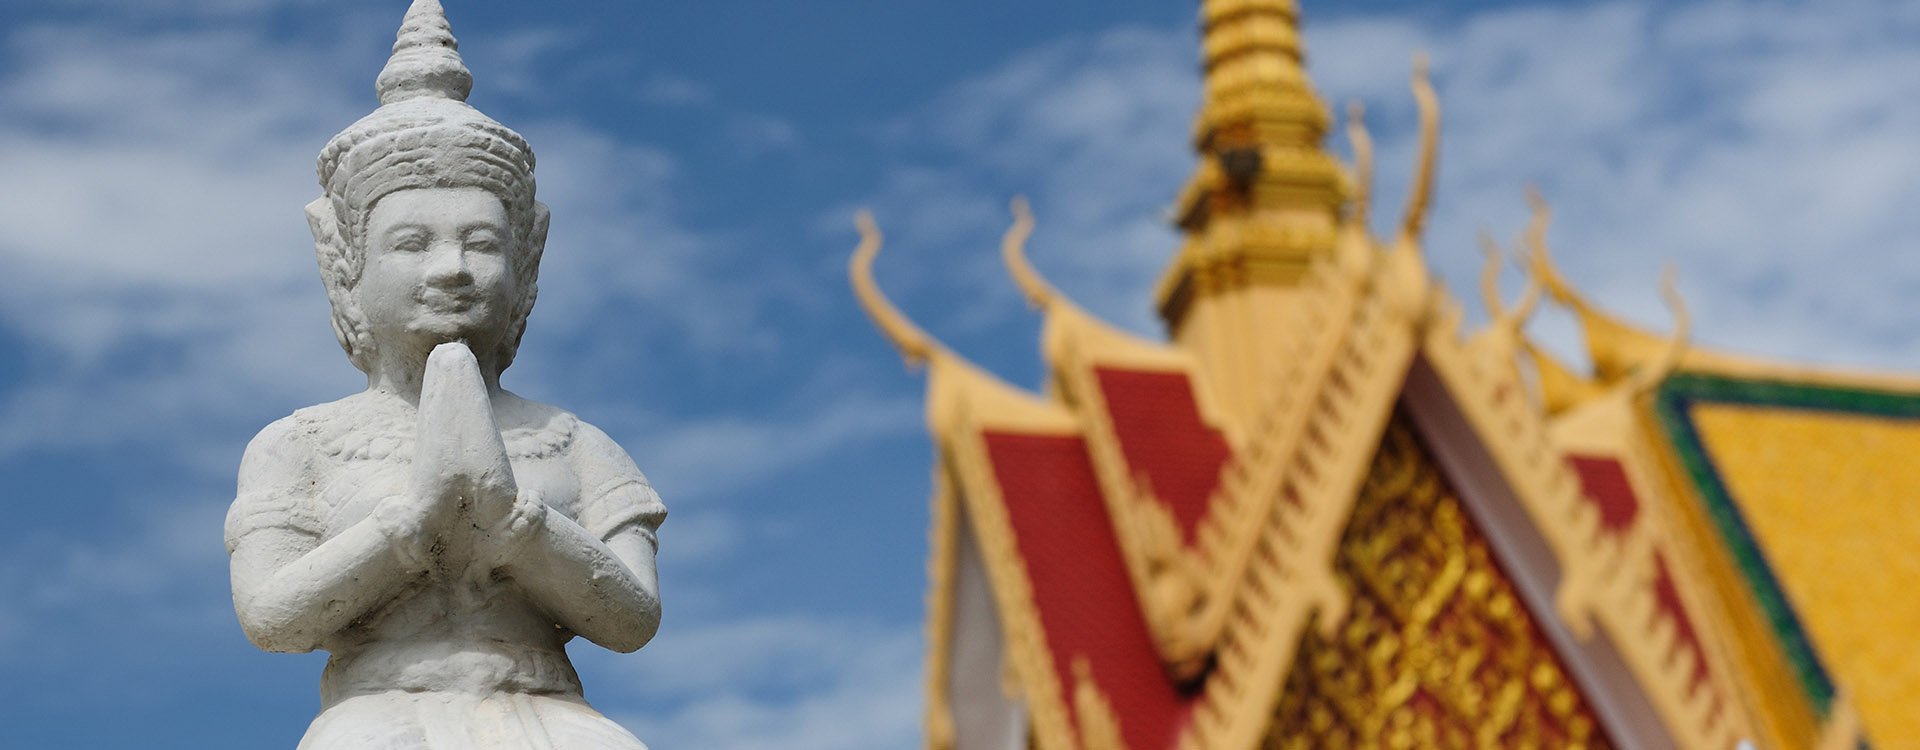 Cambodia, Phnom Penh, Royal Palace statue